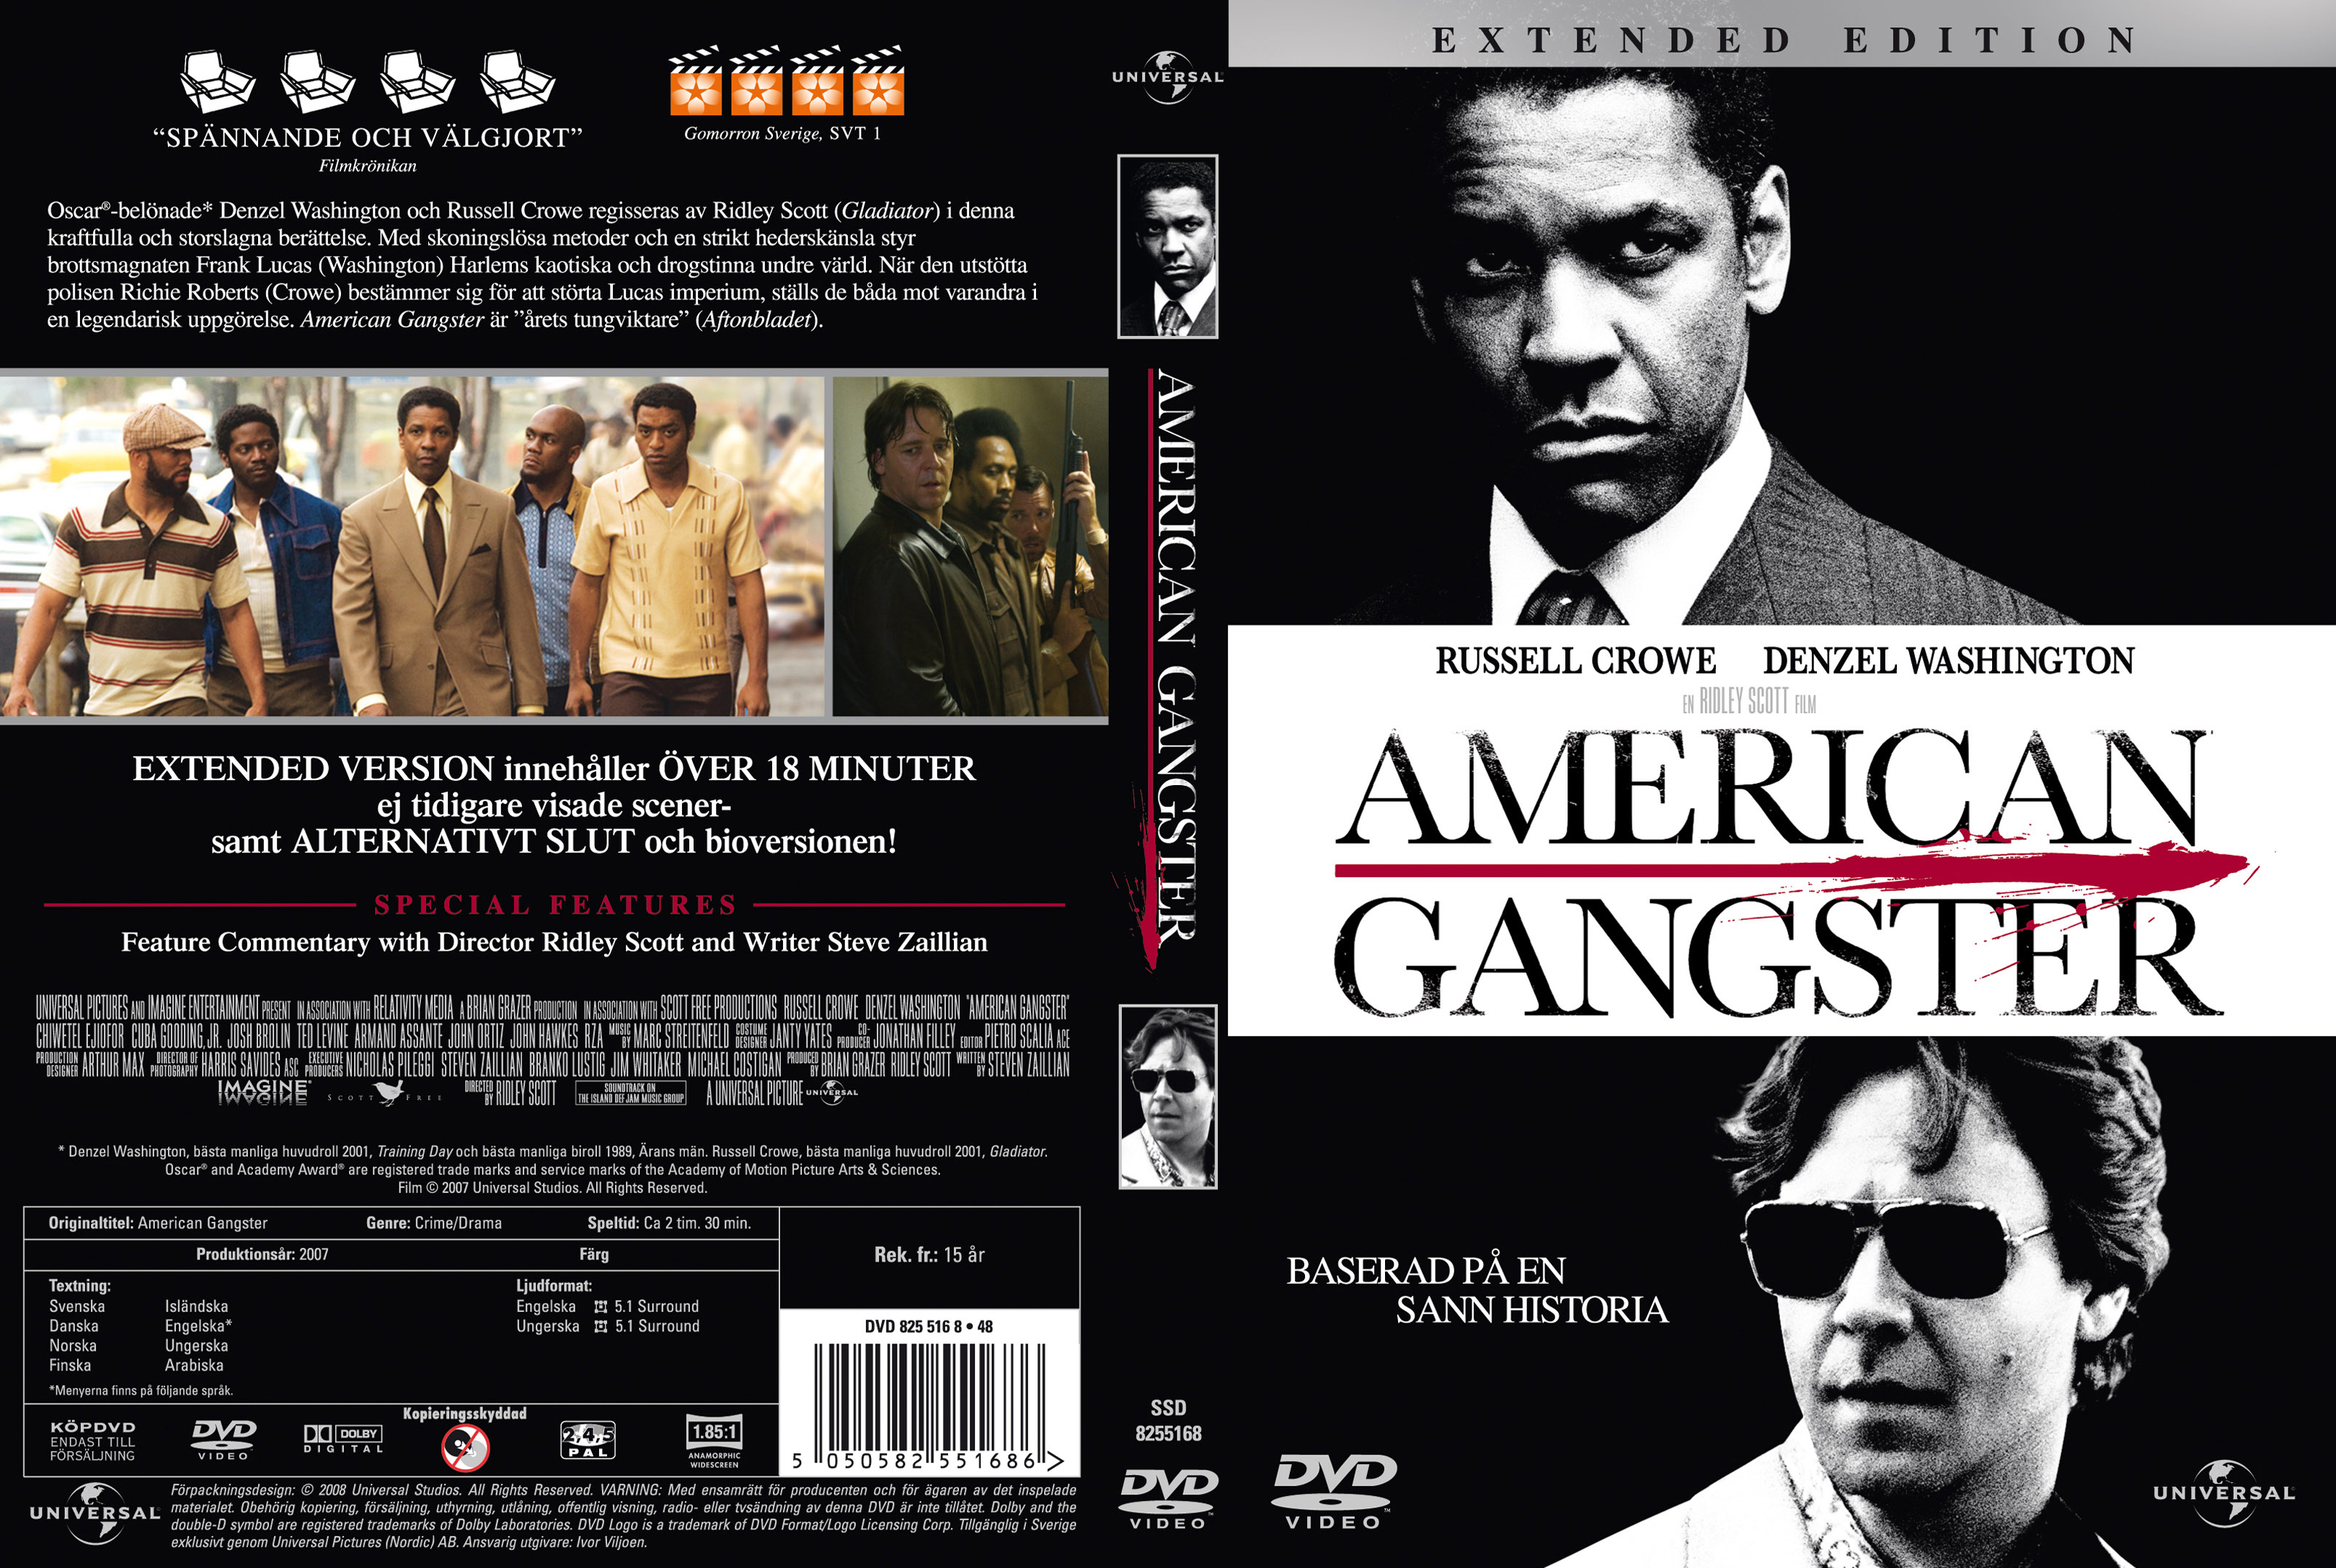 American Gangster - 2007